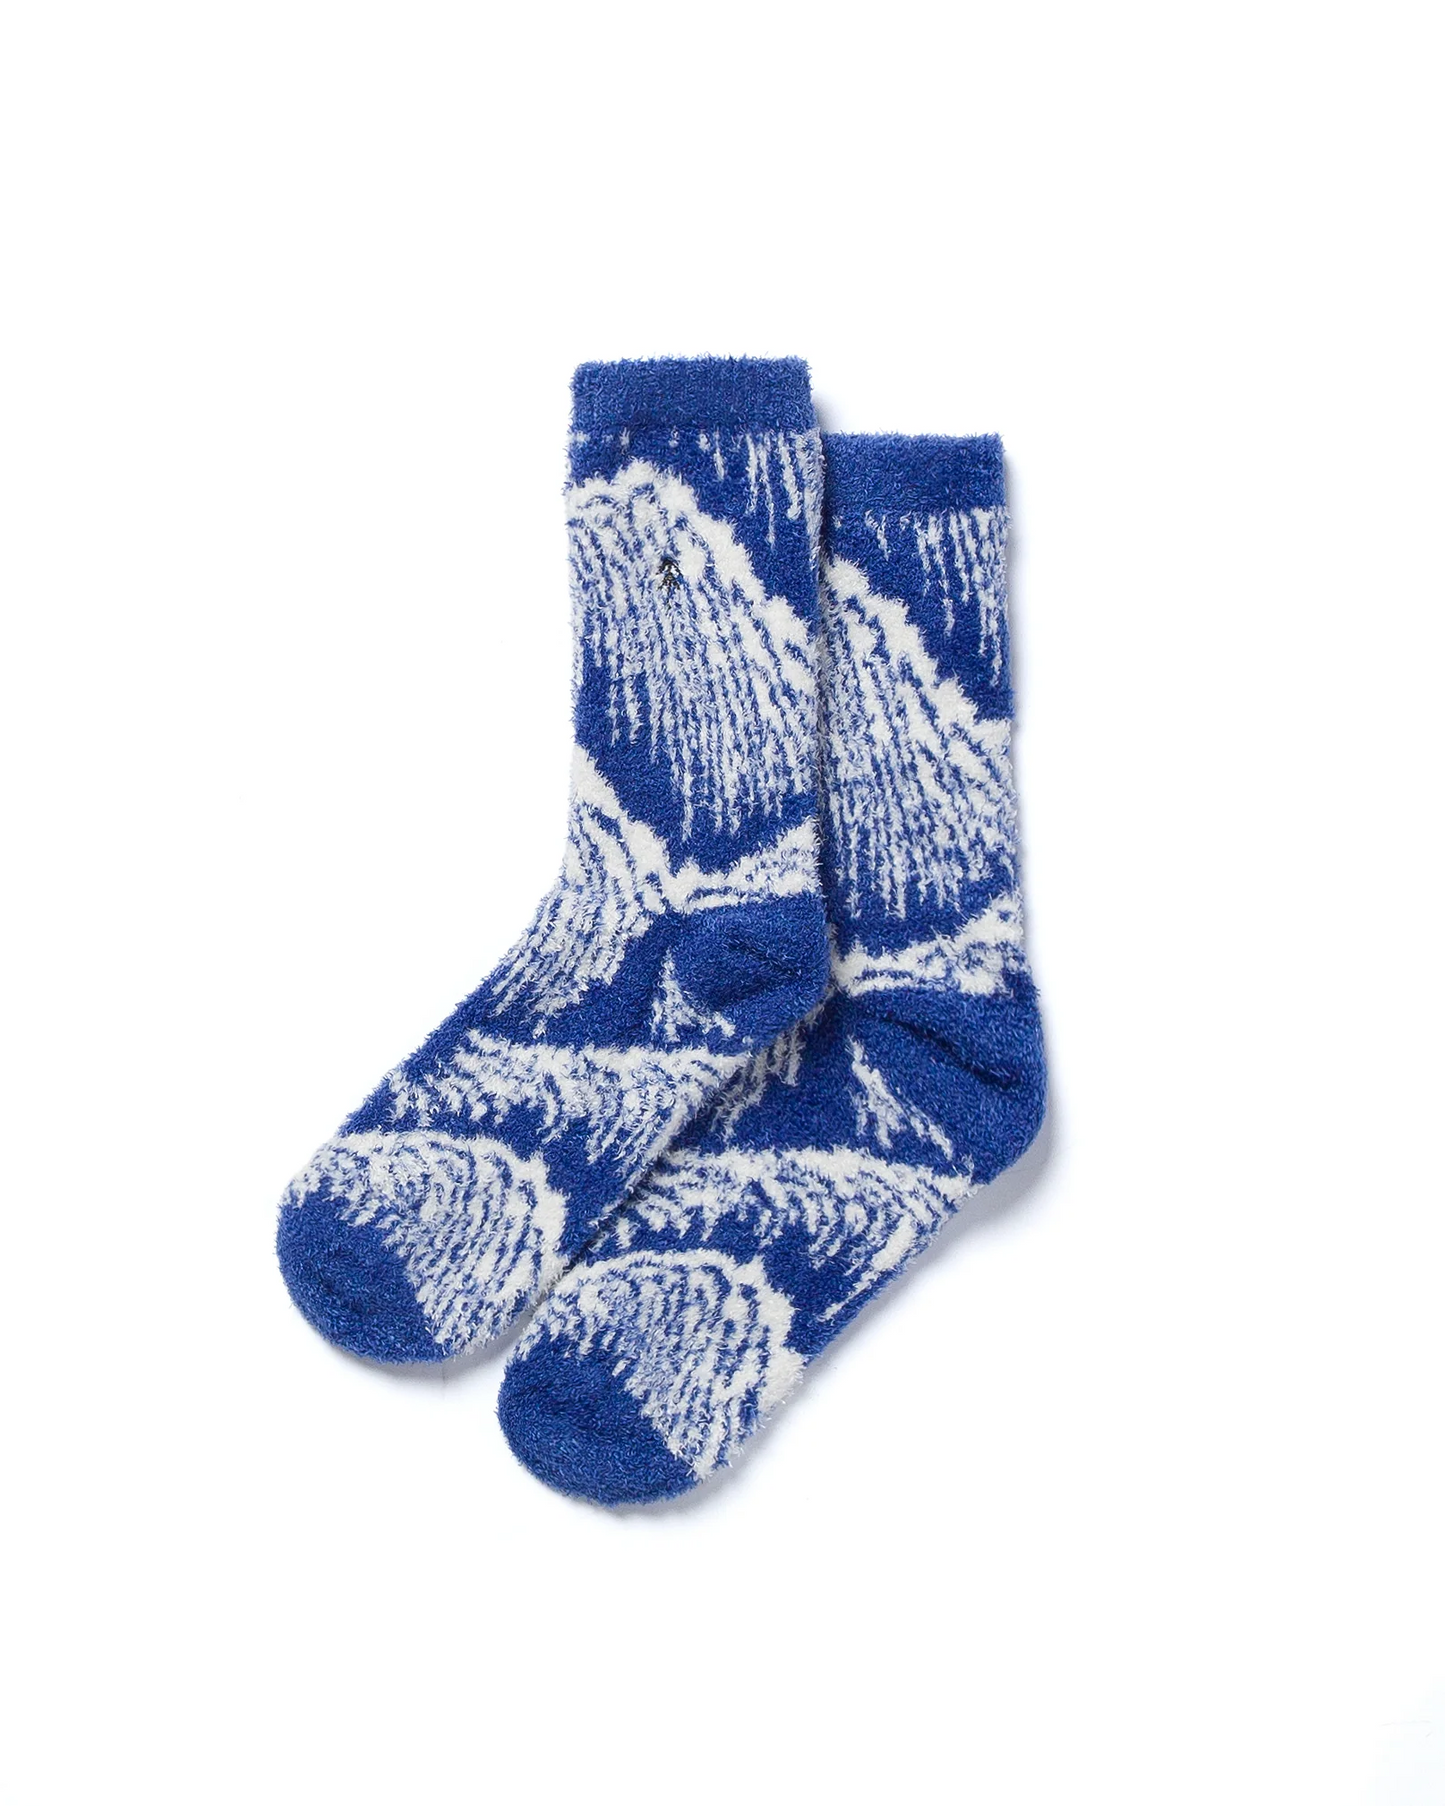 Parks Project Acadia Waves Cozy Socks